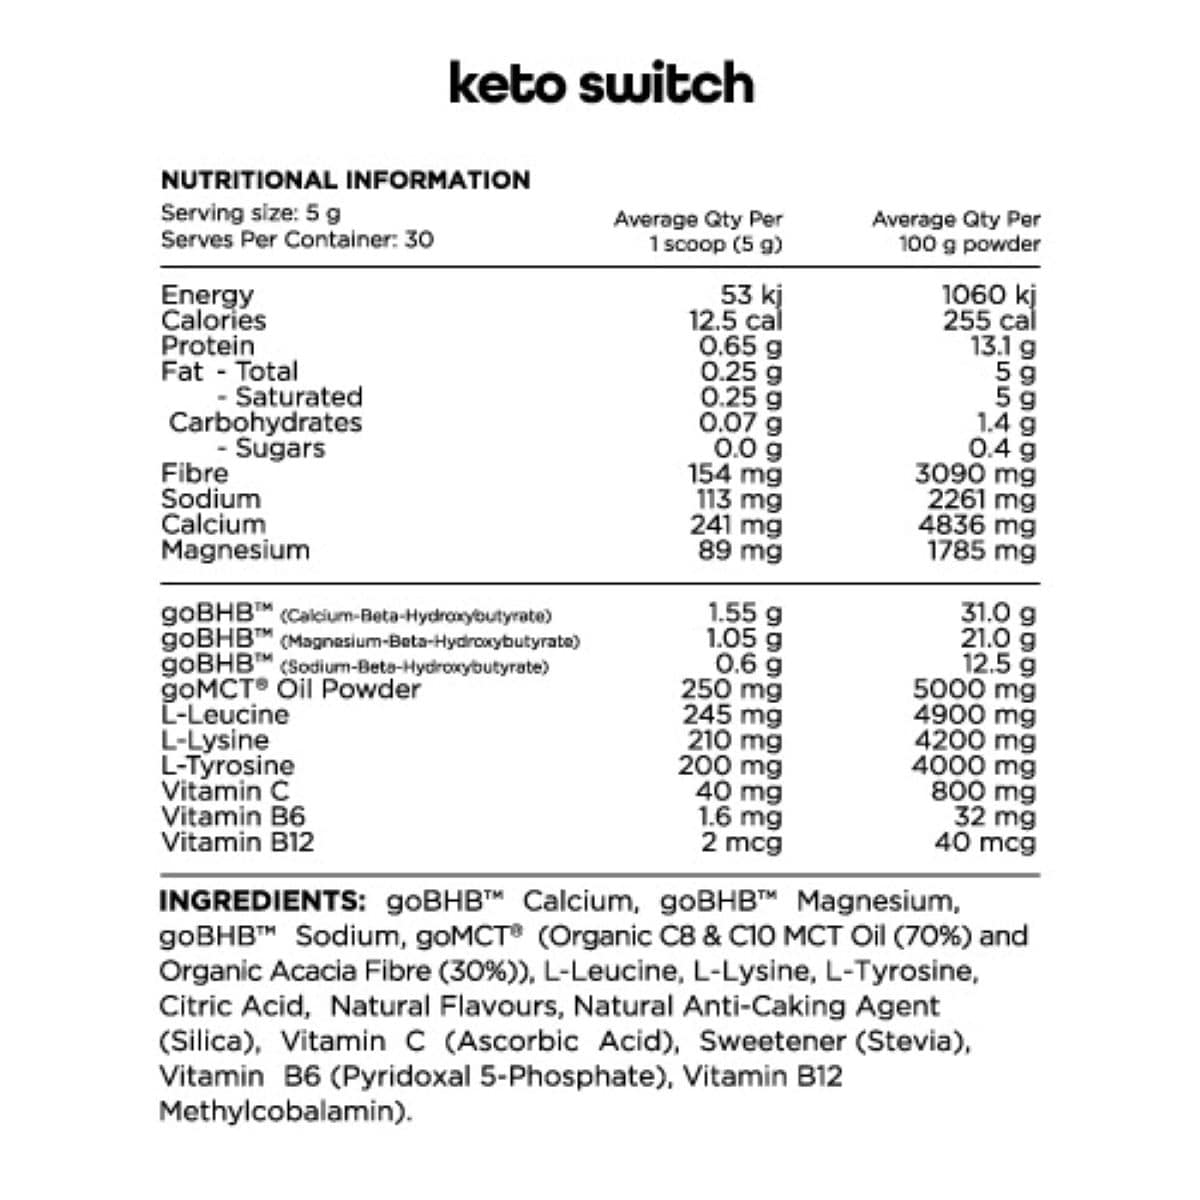 LifeSmart - Blood Keto Test Kit – Ketogenic Supplies